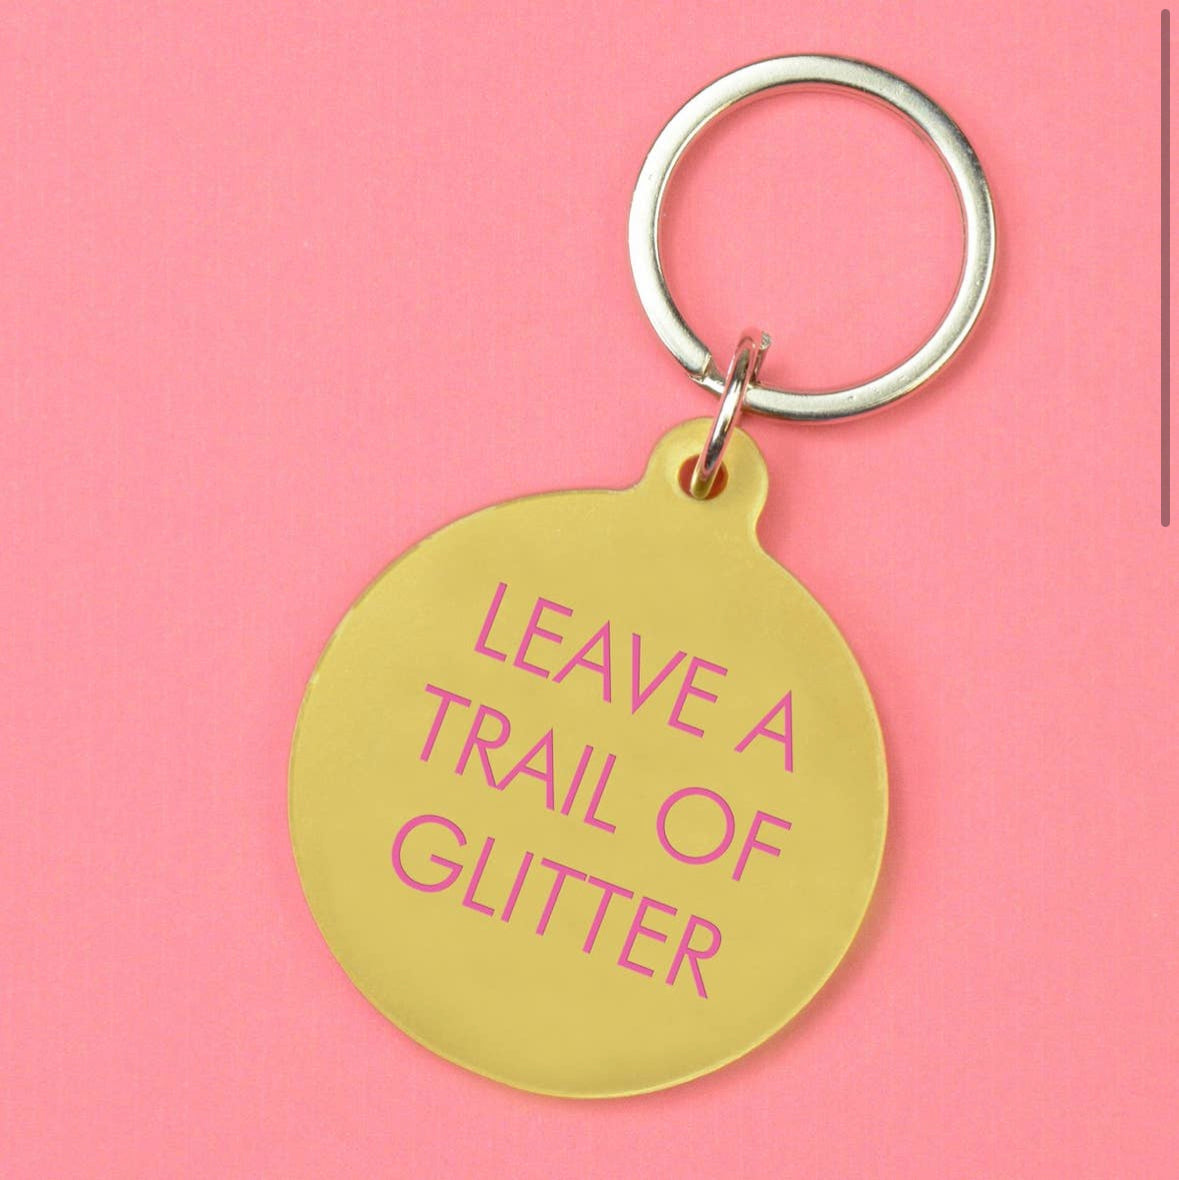 Leave A Trail Of Glitter Keytag